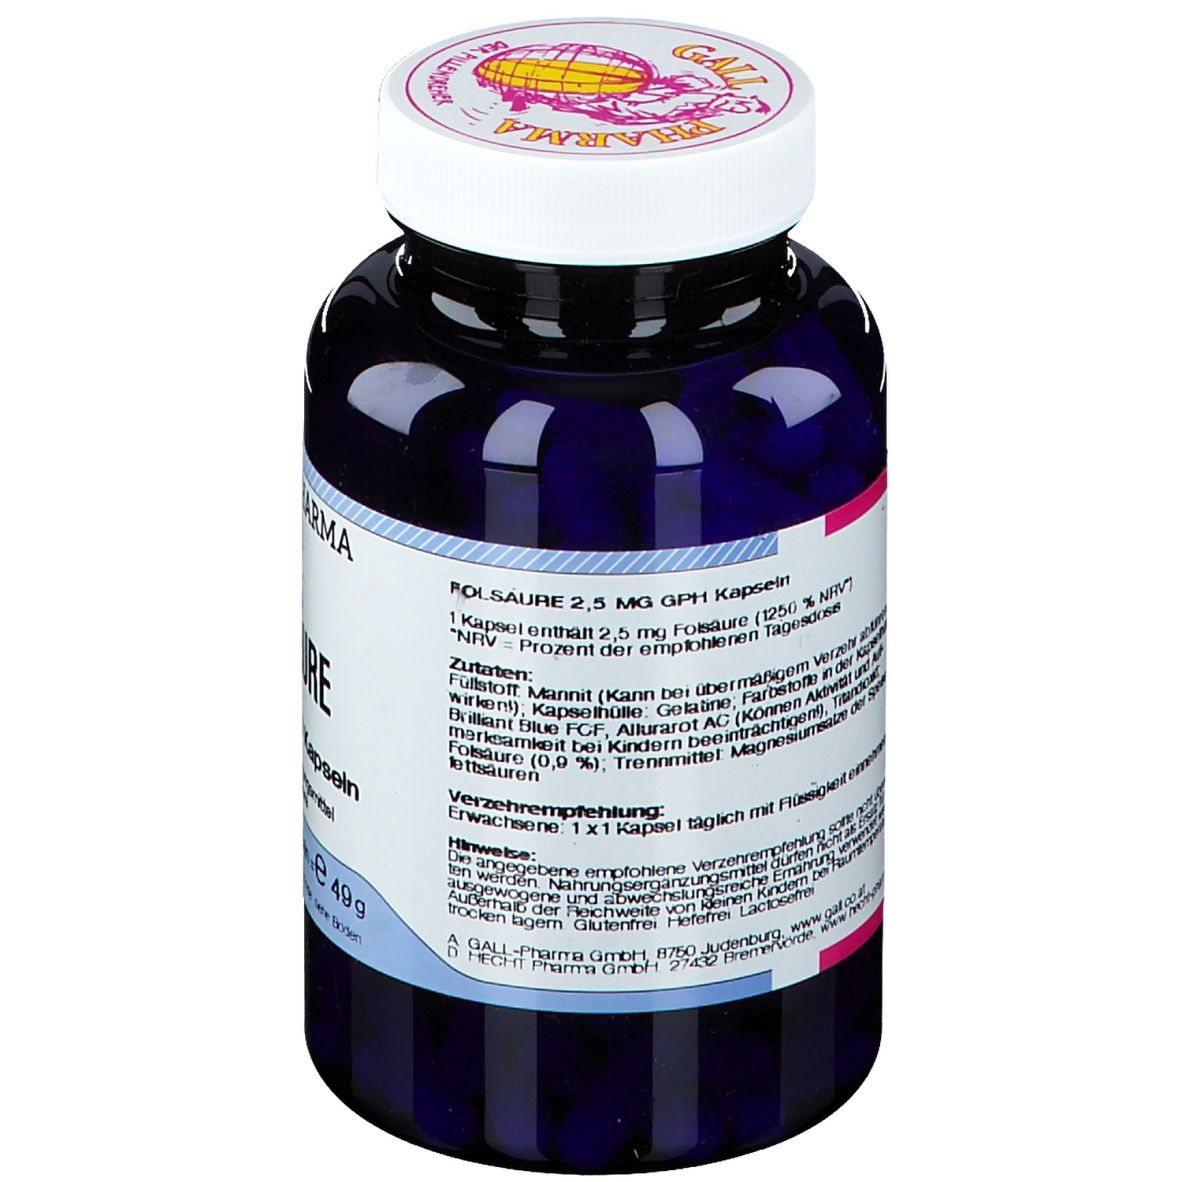 Folsäure 2,5 mg GPH Kapseln